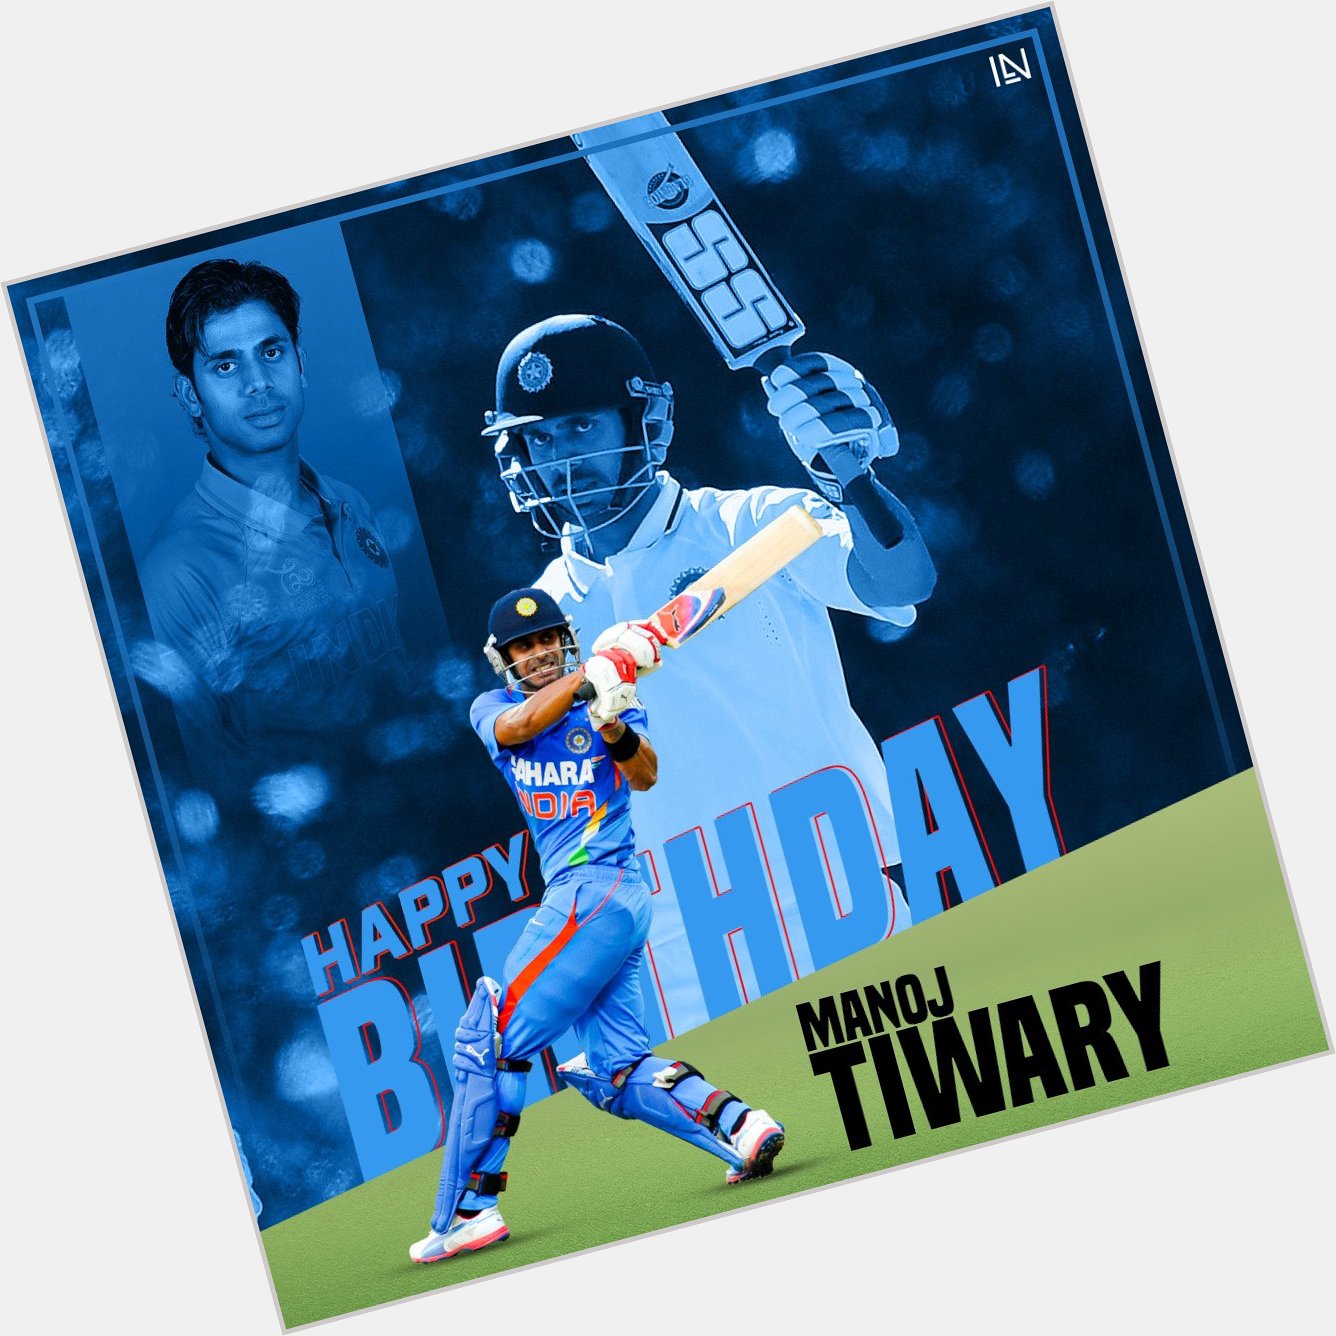  15 international matches 302 runs

Happy Birthday To Indian Cricketer Manoj Tiwary 